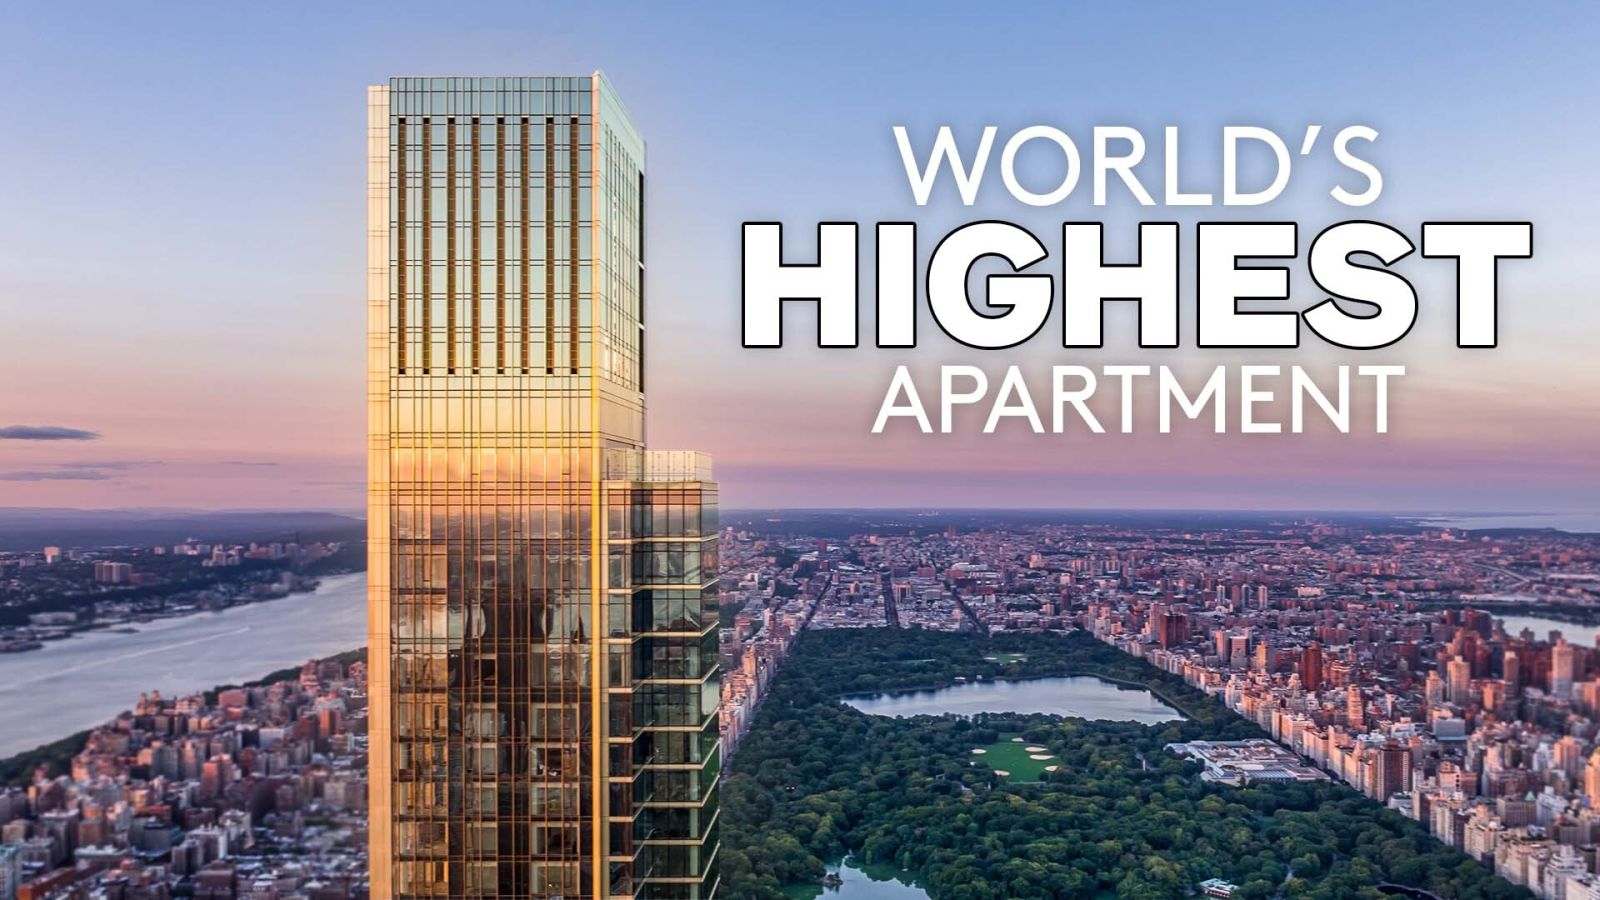 Inside The World's Highest Apartment